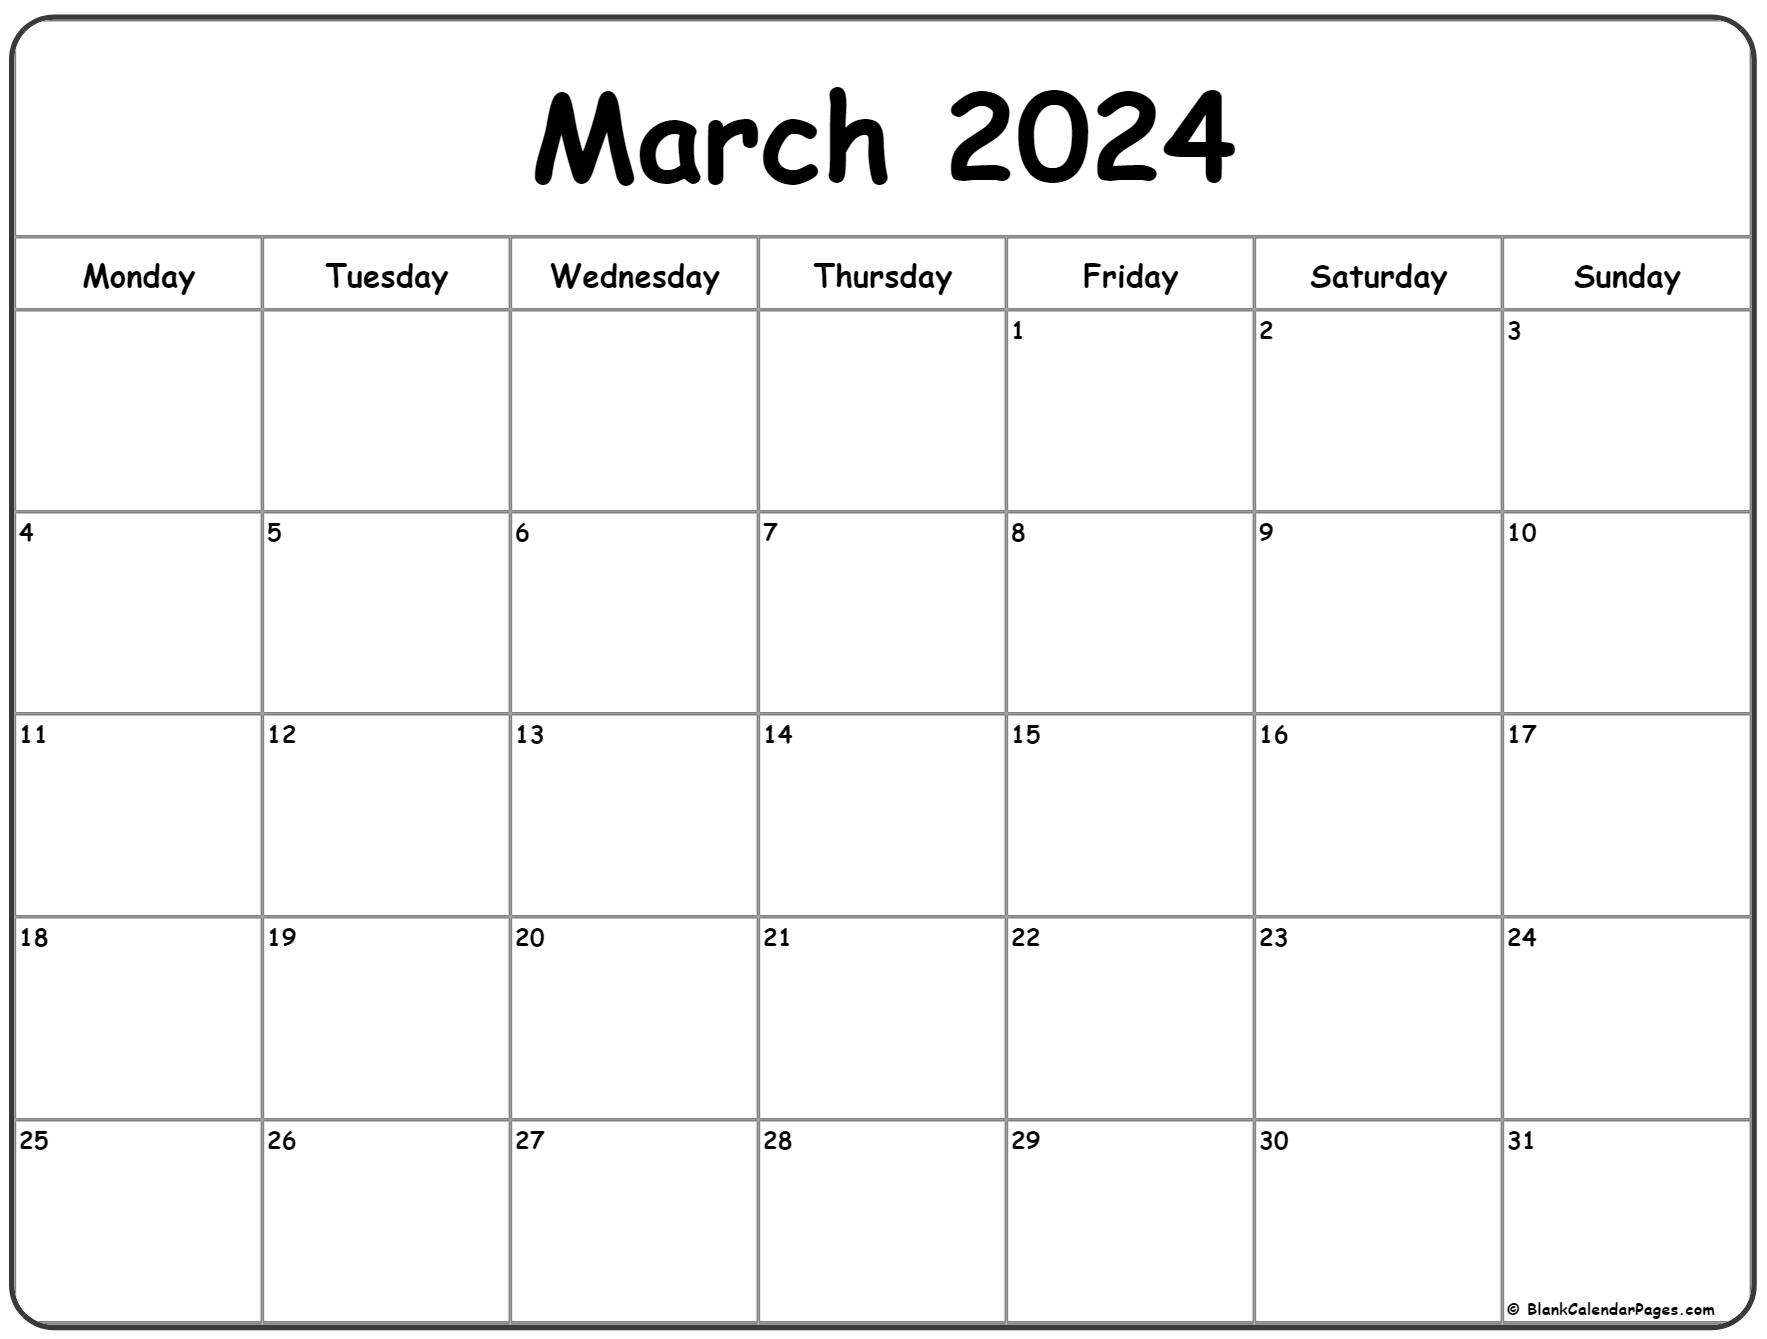 March 2024 Monday Calendar | Monday To Sunday for 2024 March Printable Calendar